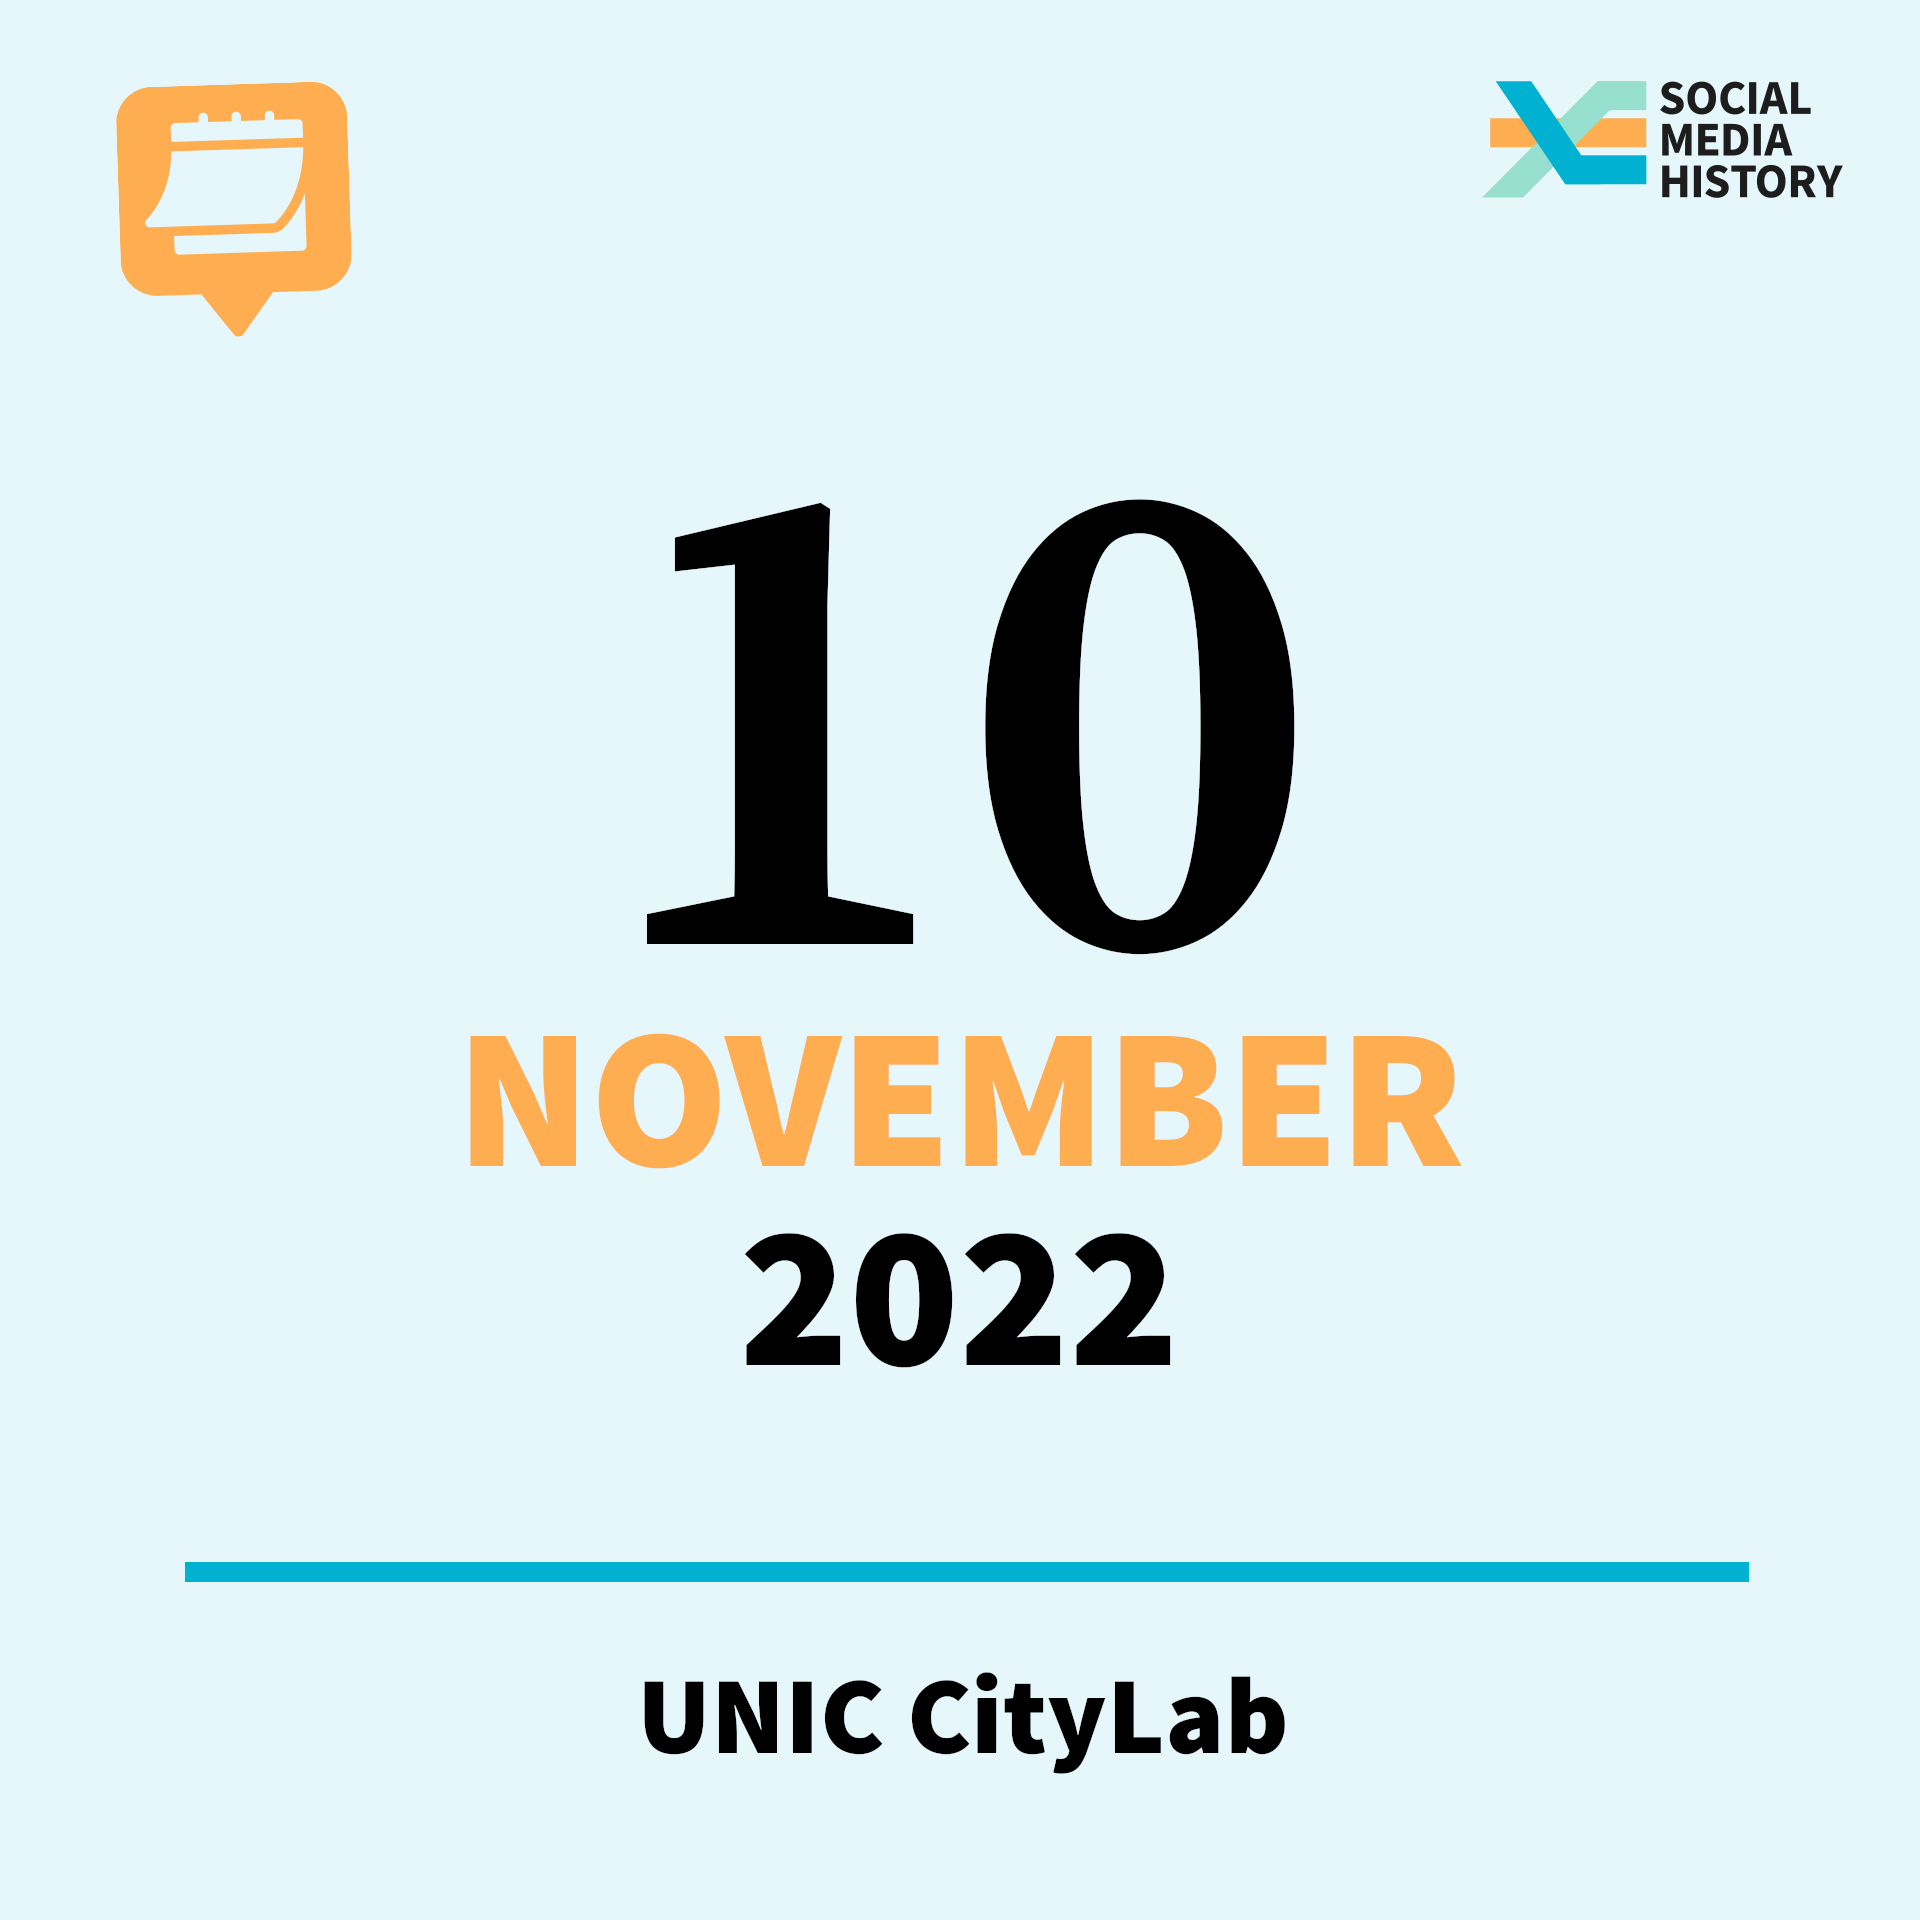 Ankündigung. Veranstaltung UNIC CityLab am 10. November 2022.